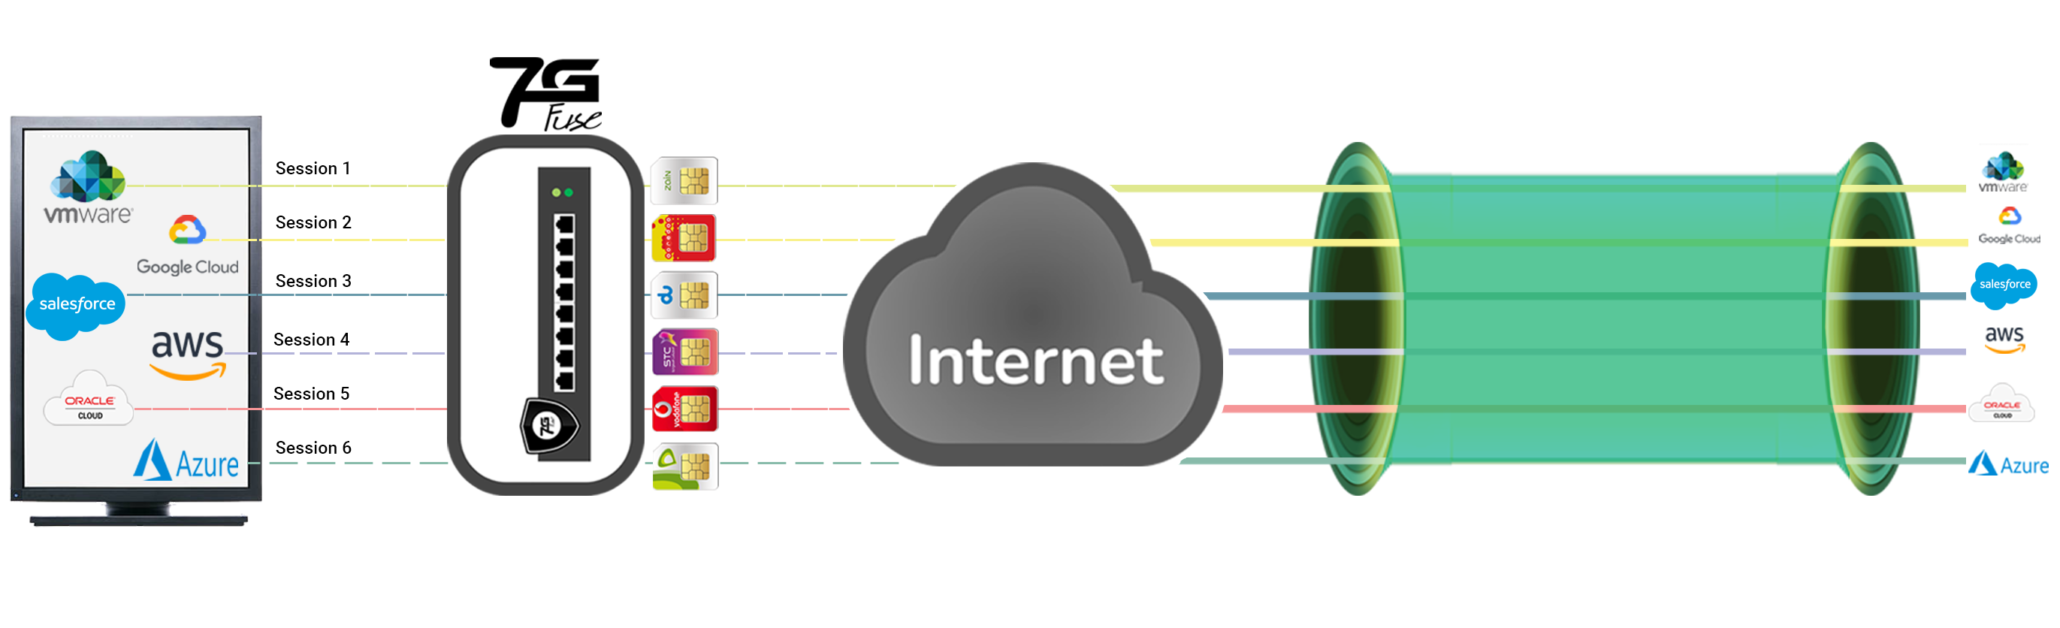 Intelligent Load Balancing Single user traffic utilizing all internet links Load balancing feature of 7G Fuse sends traffic from single user via multiple internet links